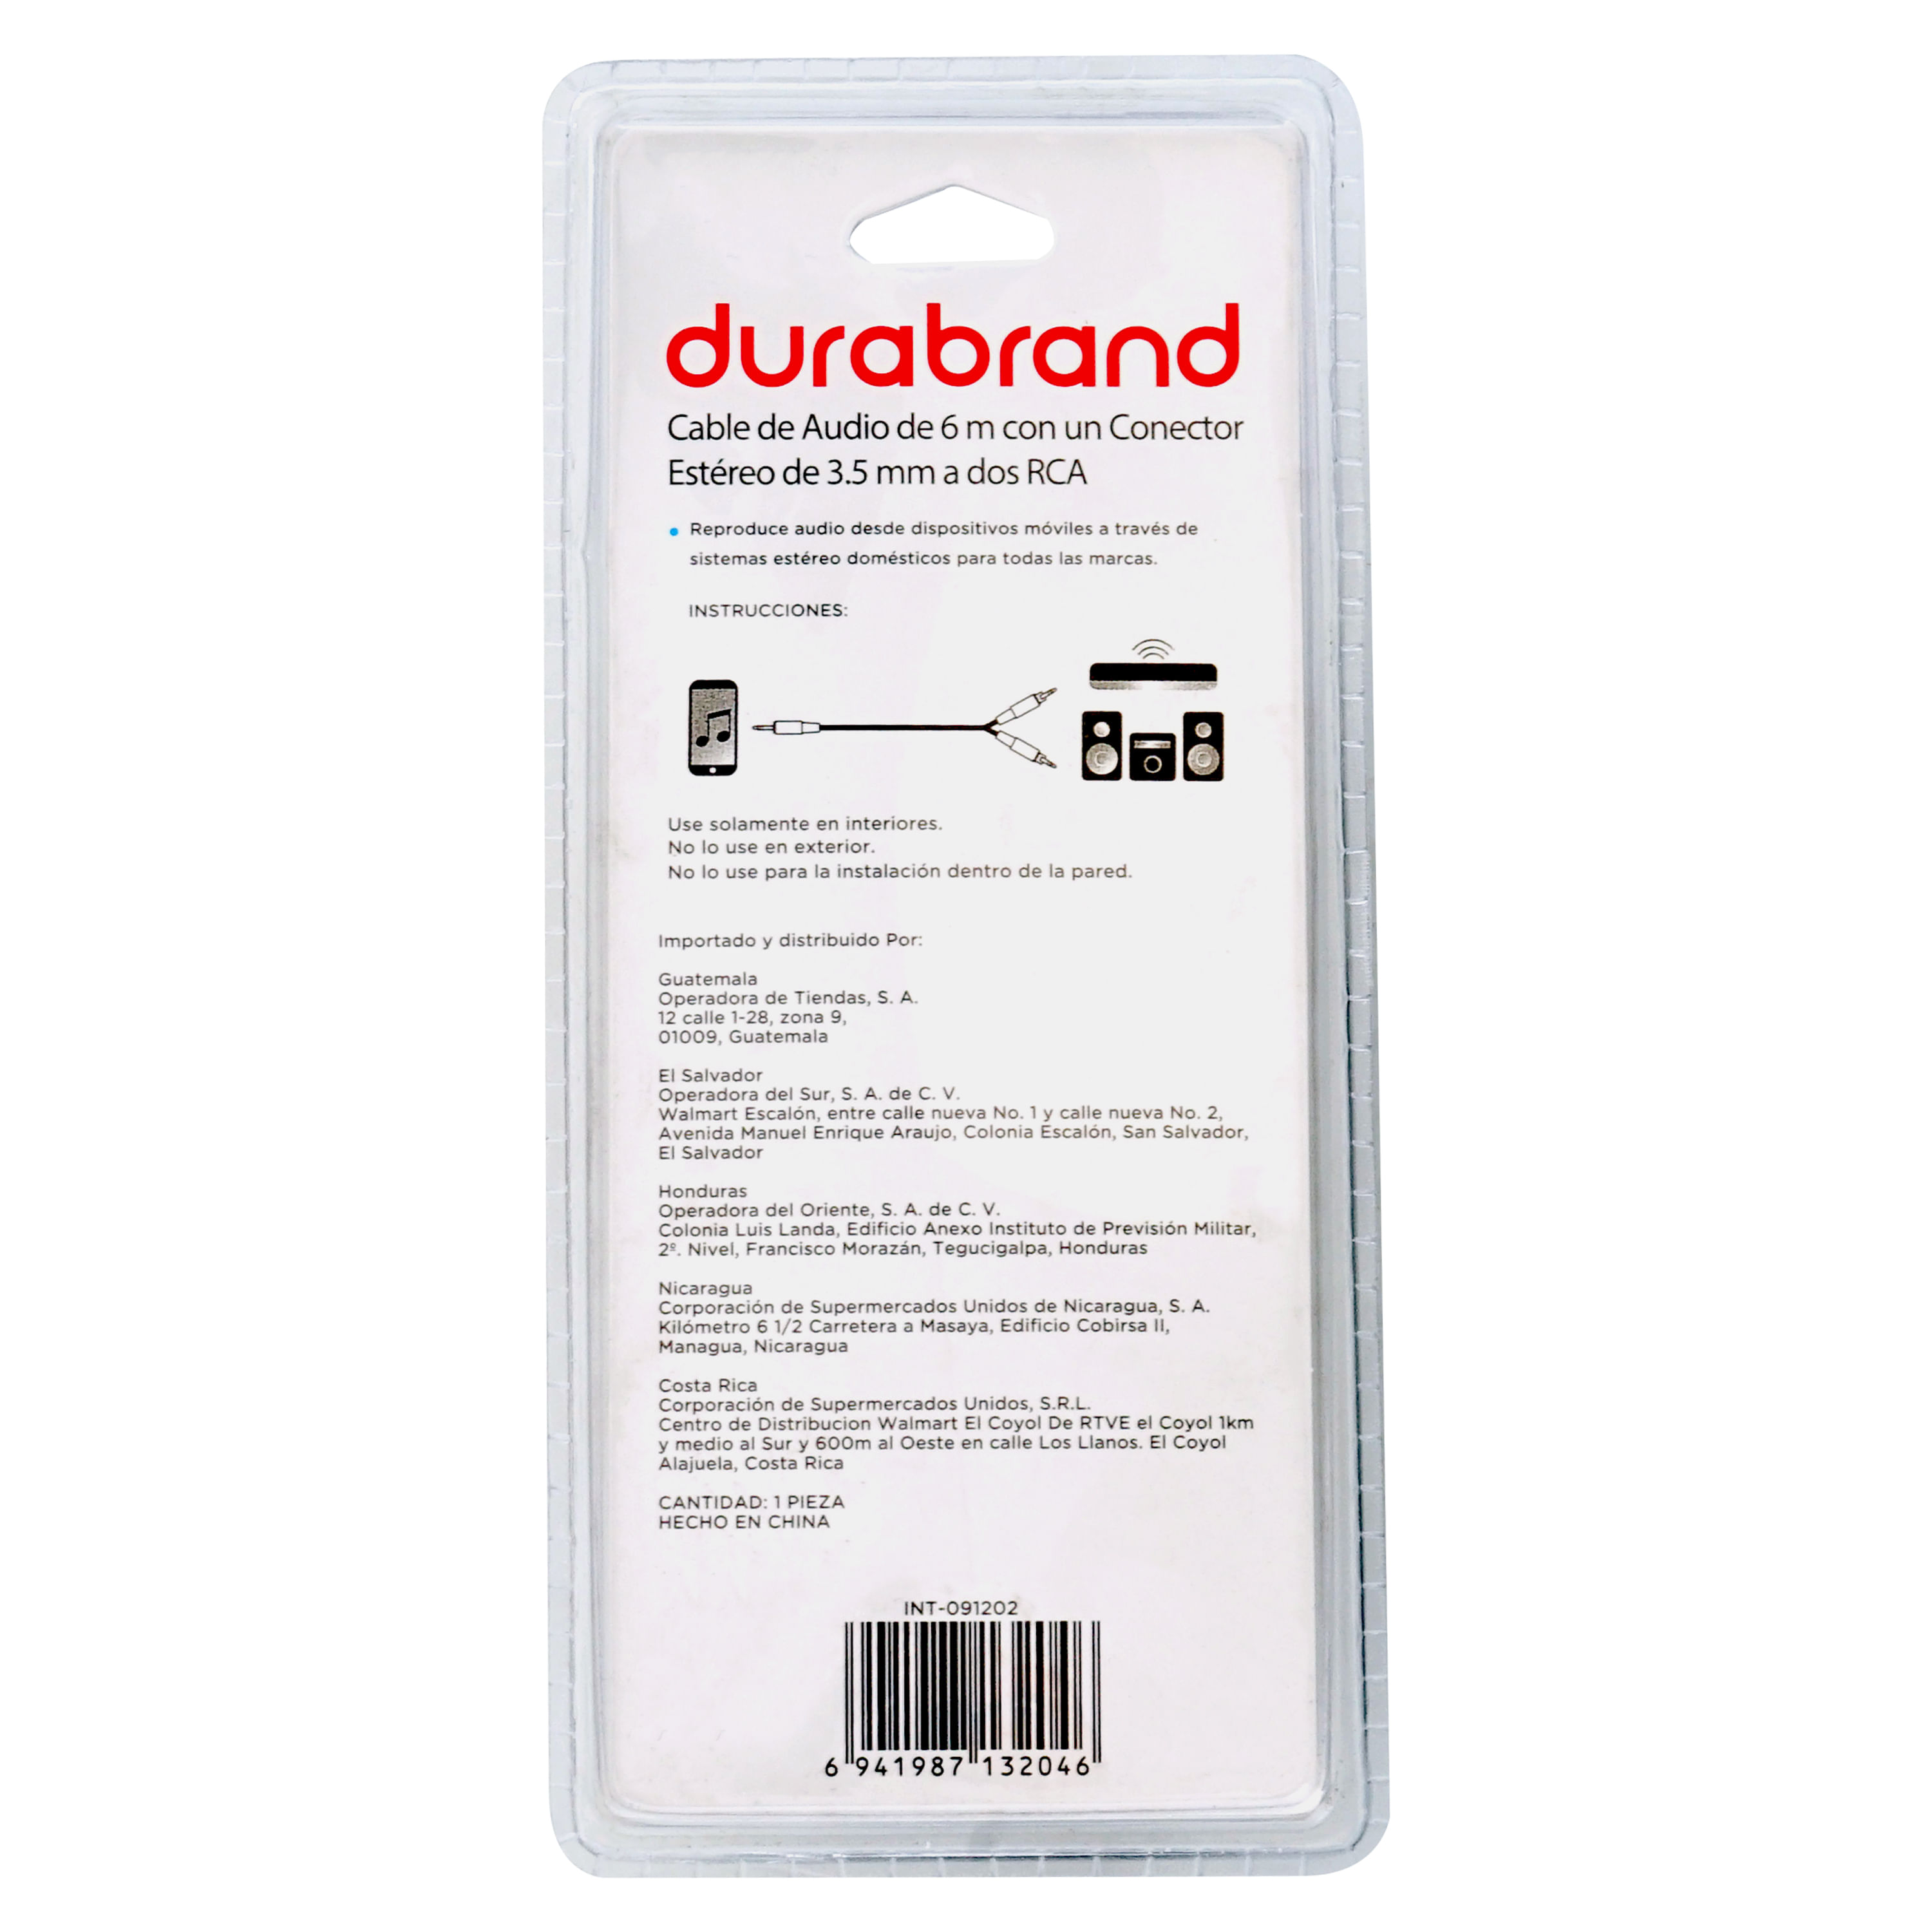 Comprar Cable Durabrand Audio / Video Rca Cable 2Mt Modelo Int-091205